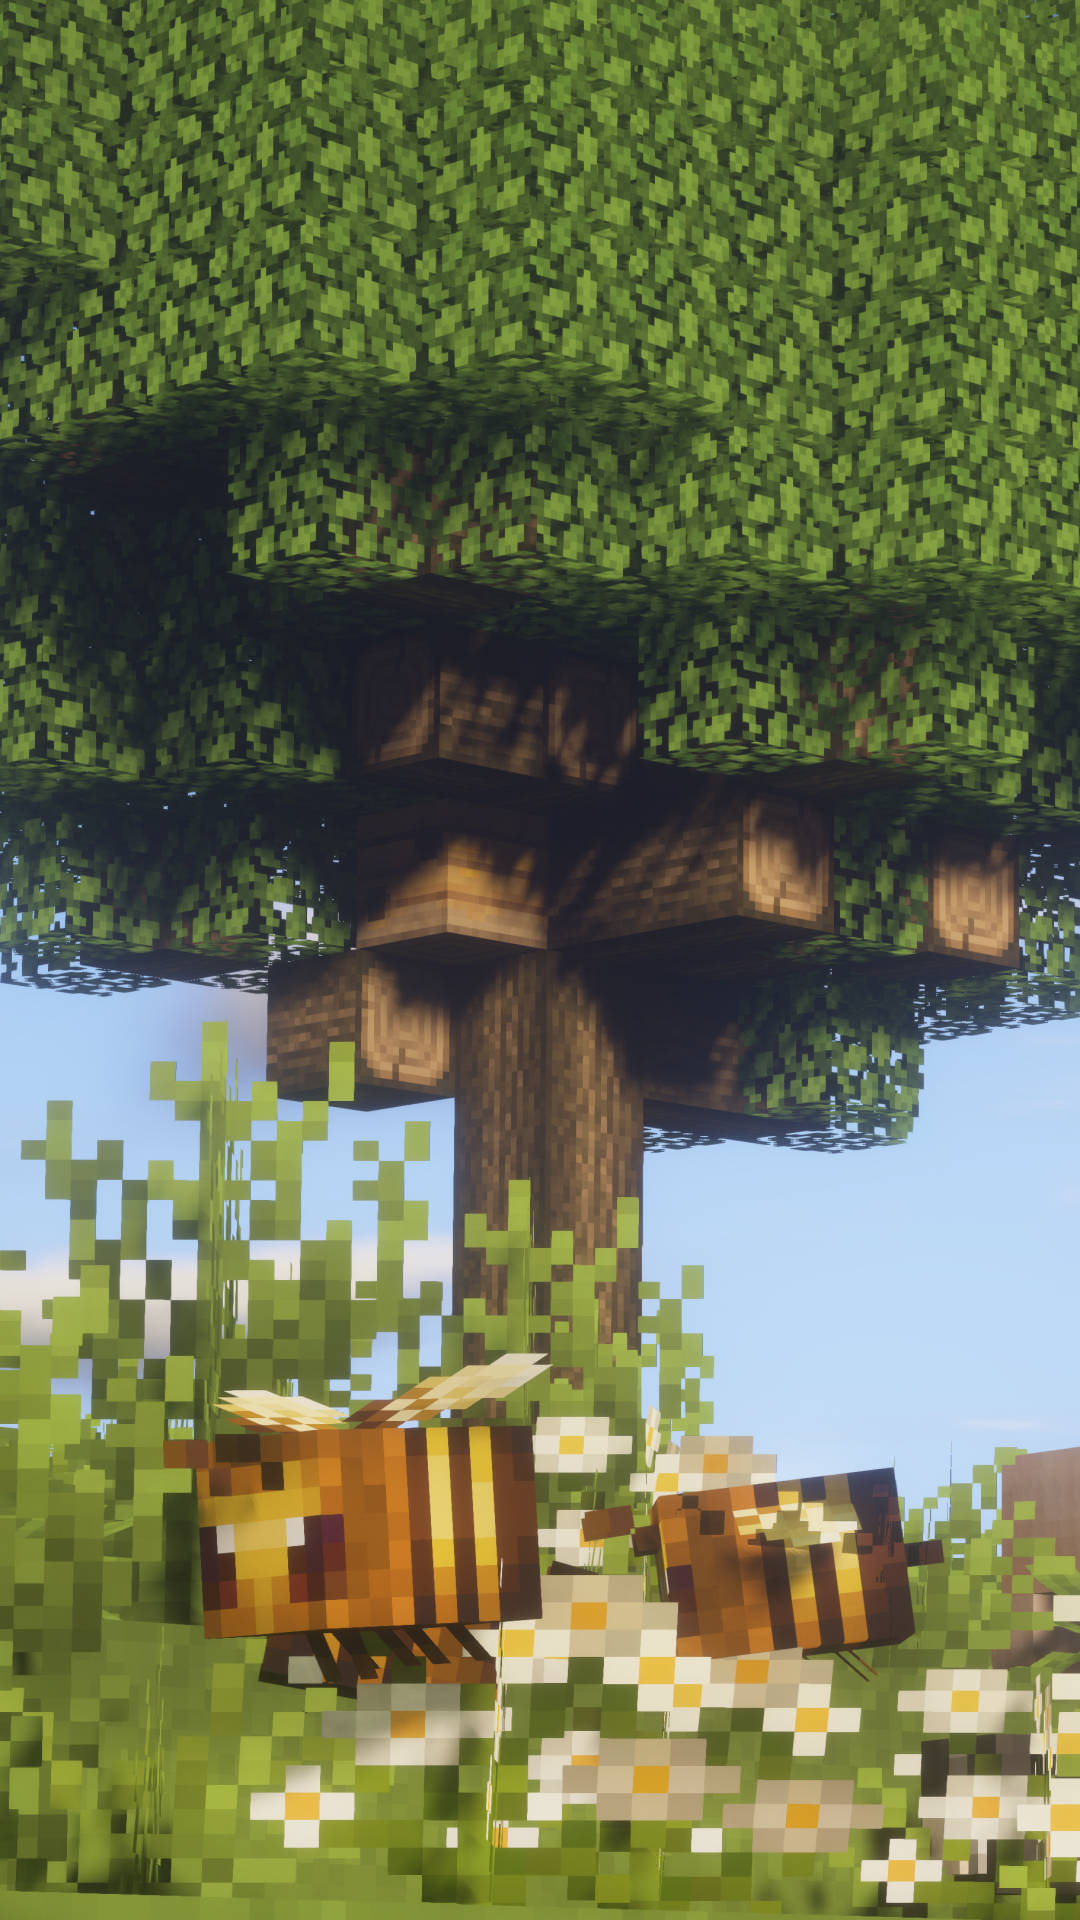 Minecraft Bees Under Tree Wallpaper